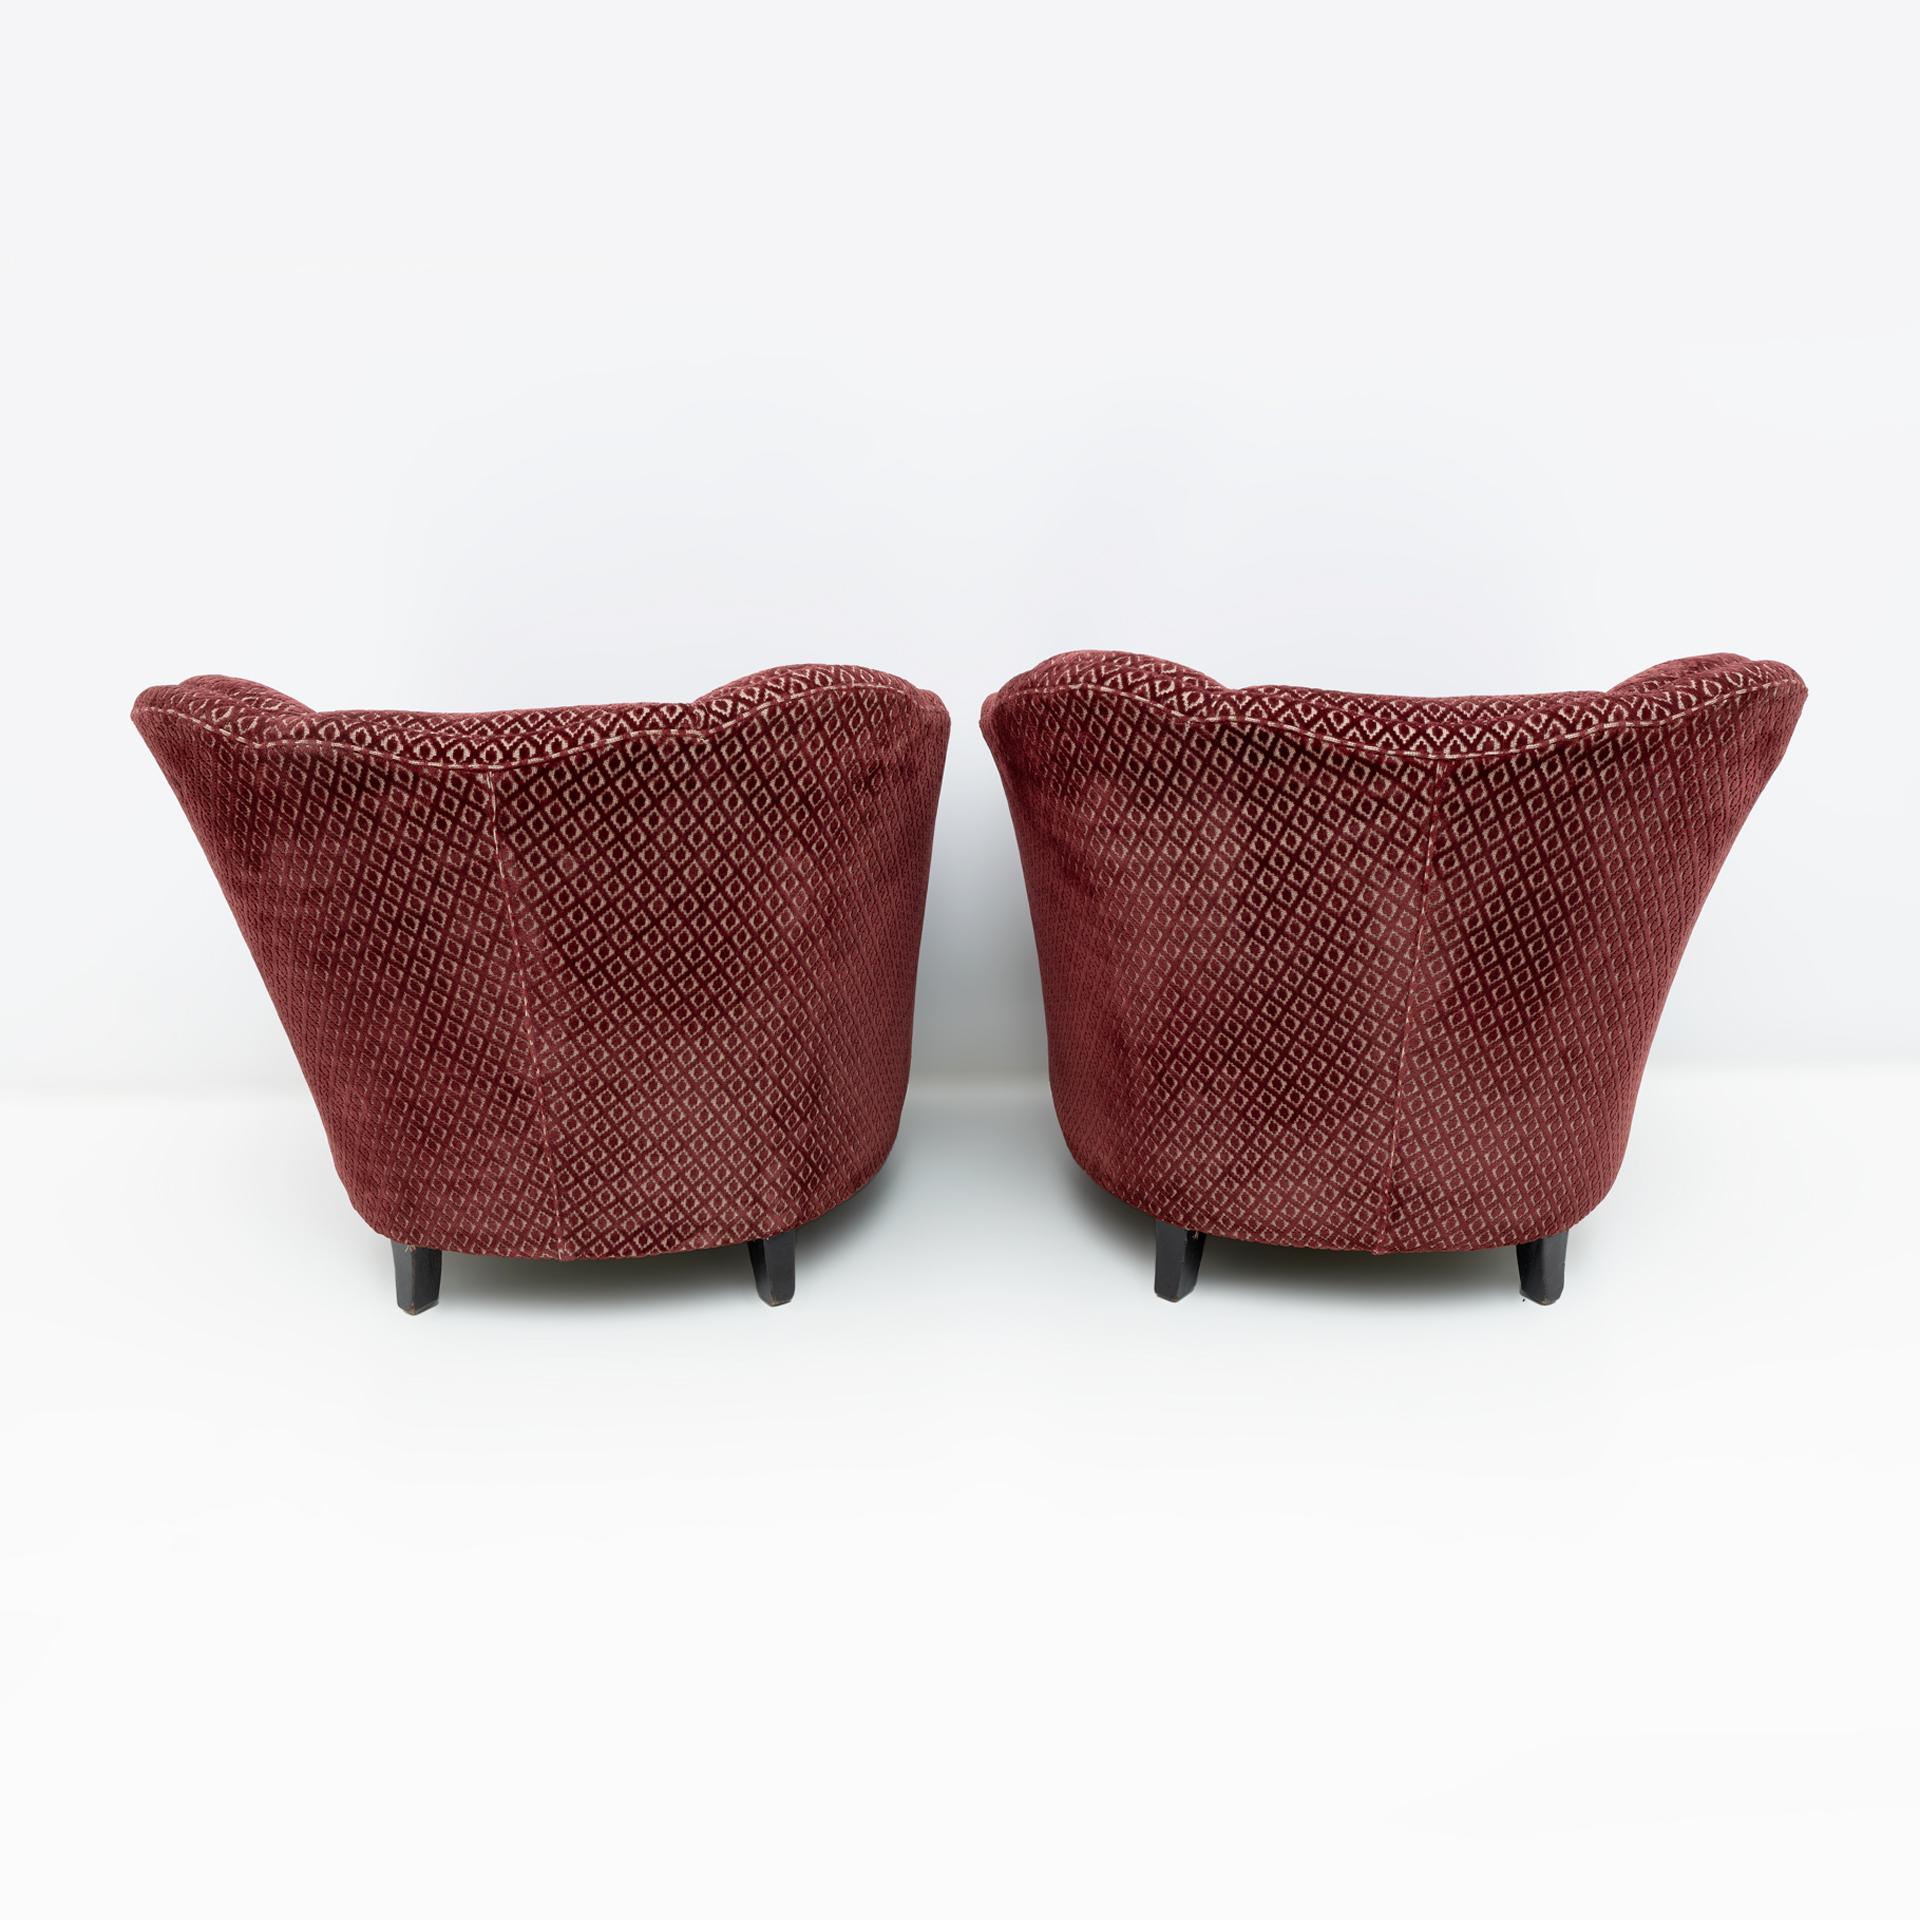 Pair of Gio Ponti Mid-Century Modern Velvet Armchairs for Casa e Giardino, 1950s For Sale 2